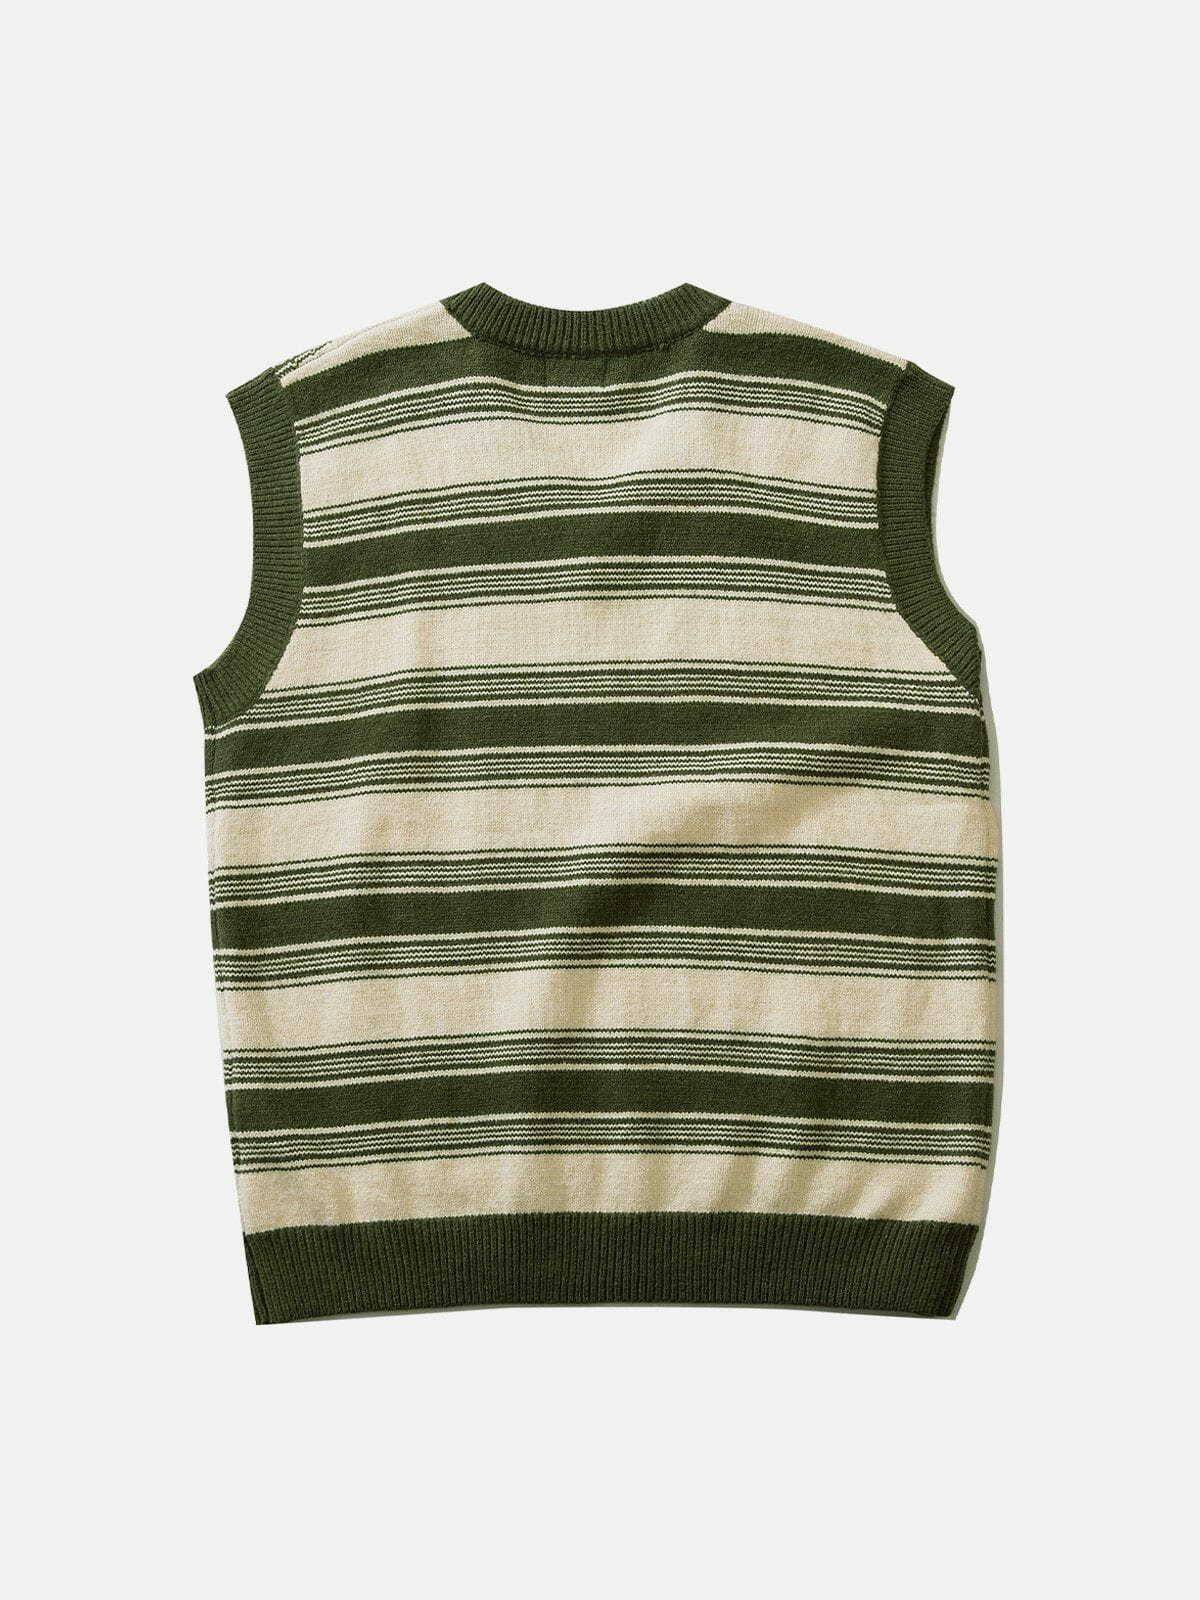 colorblock stripe sweater vest edgy retro statement piece 1646